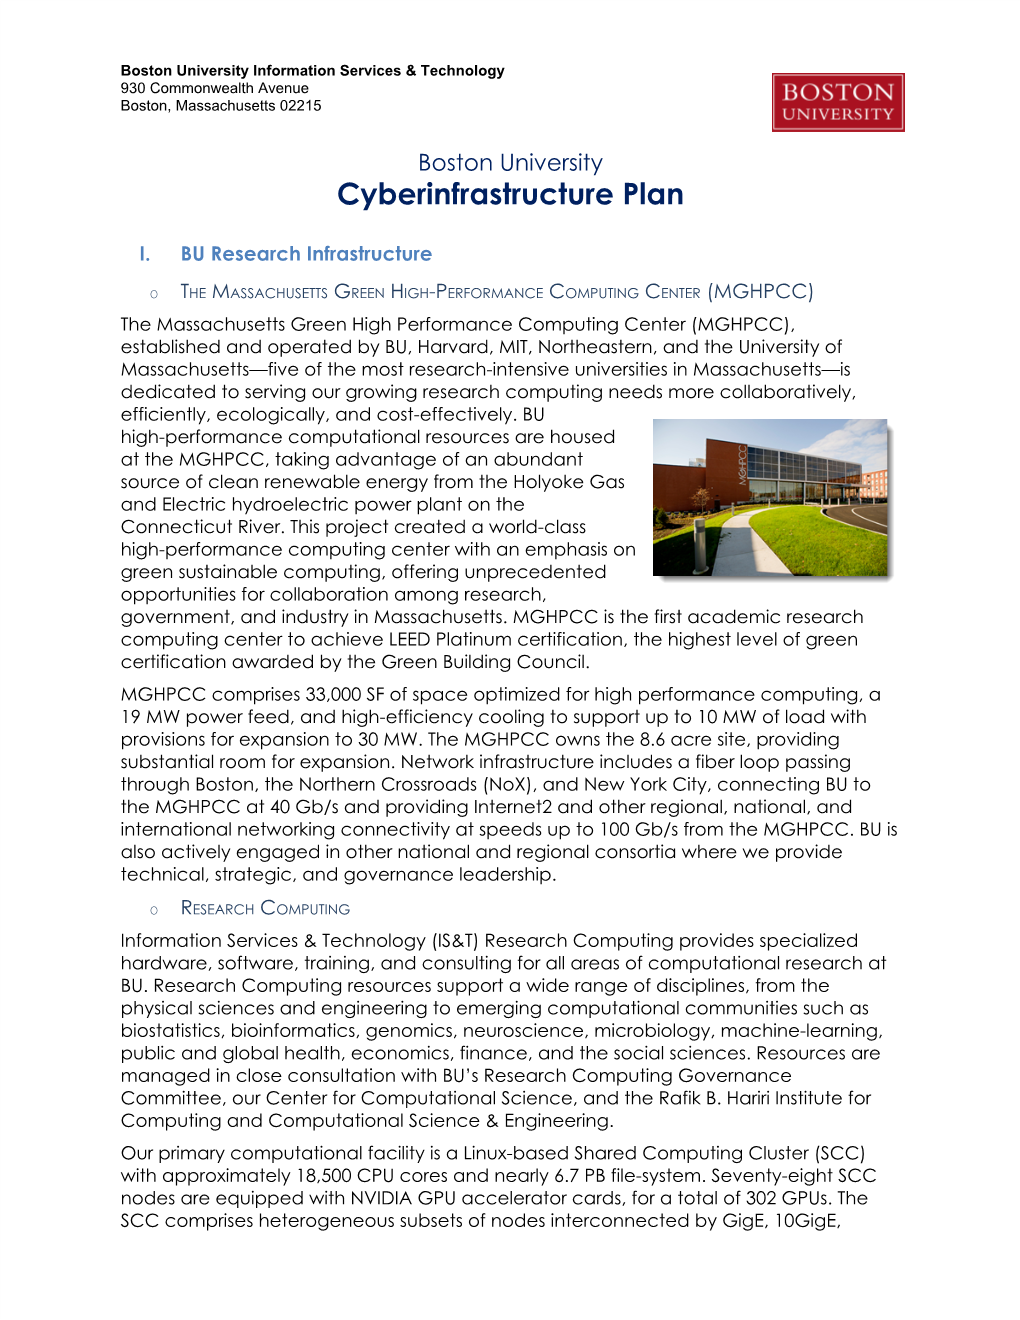 Cyberinfrastructure Plan